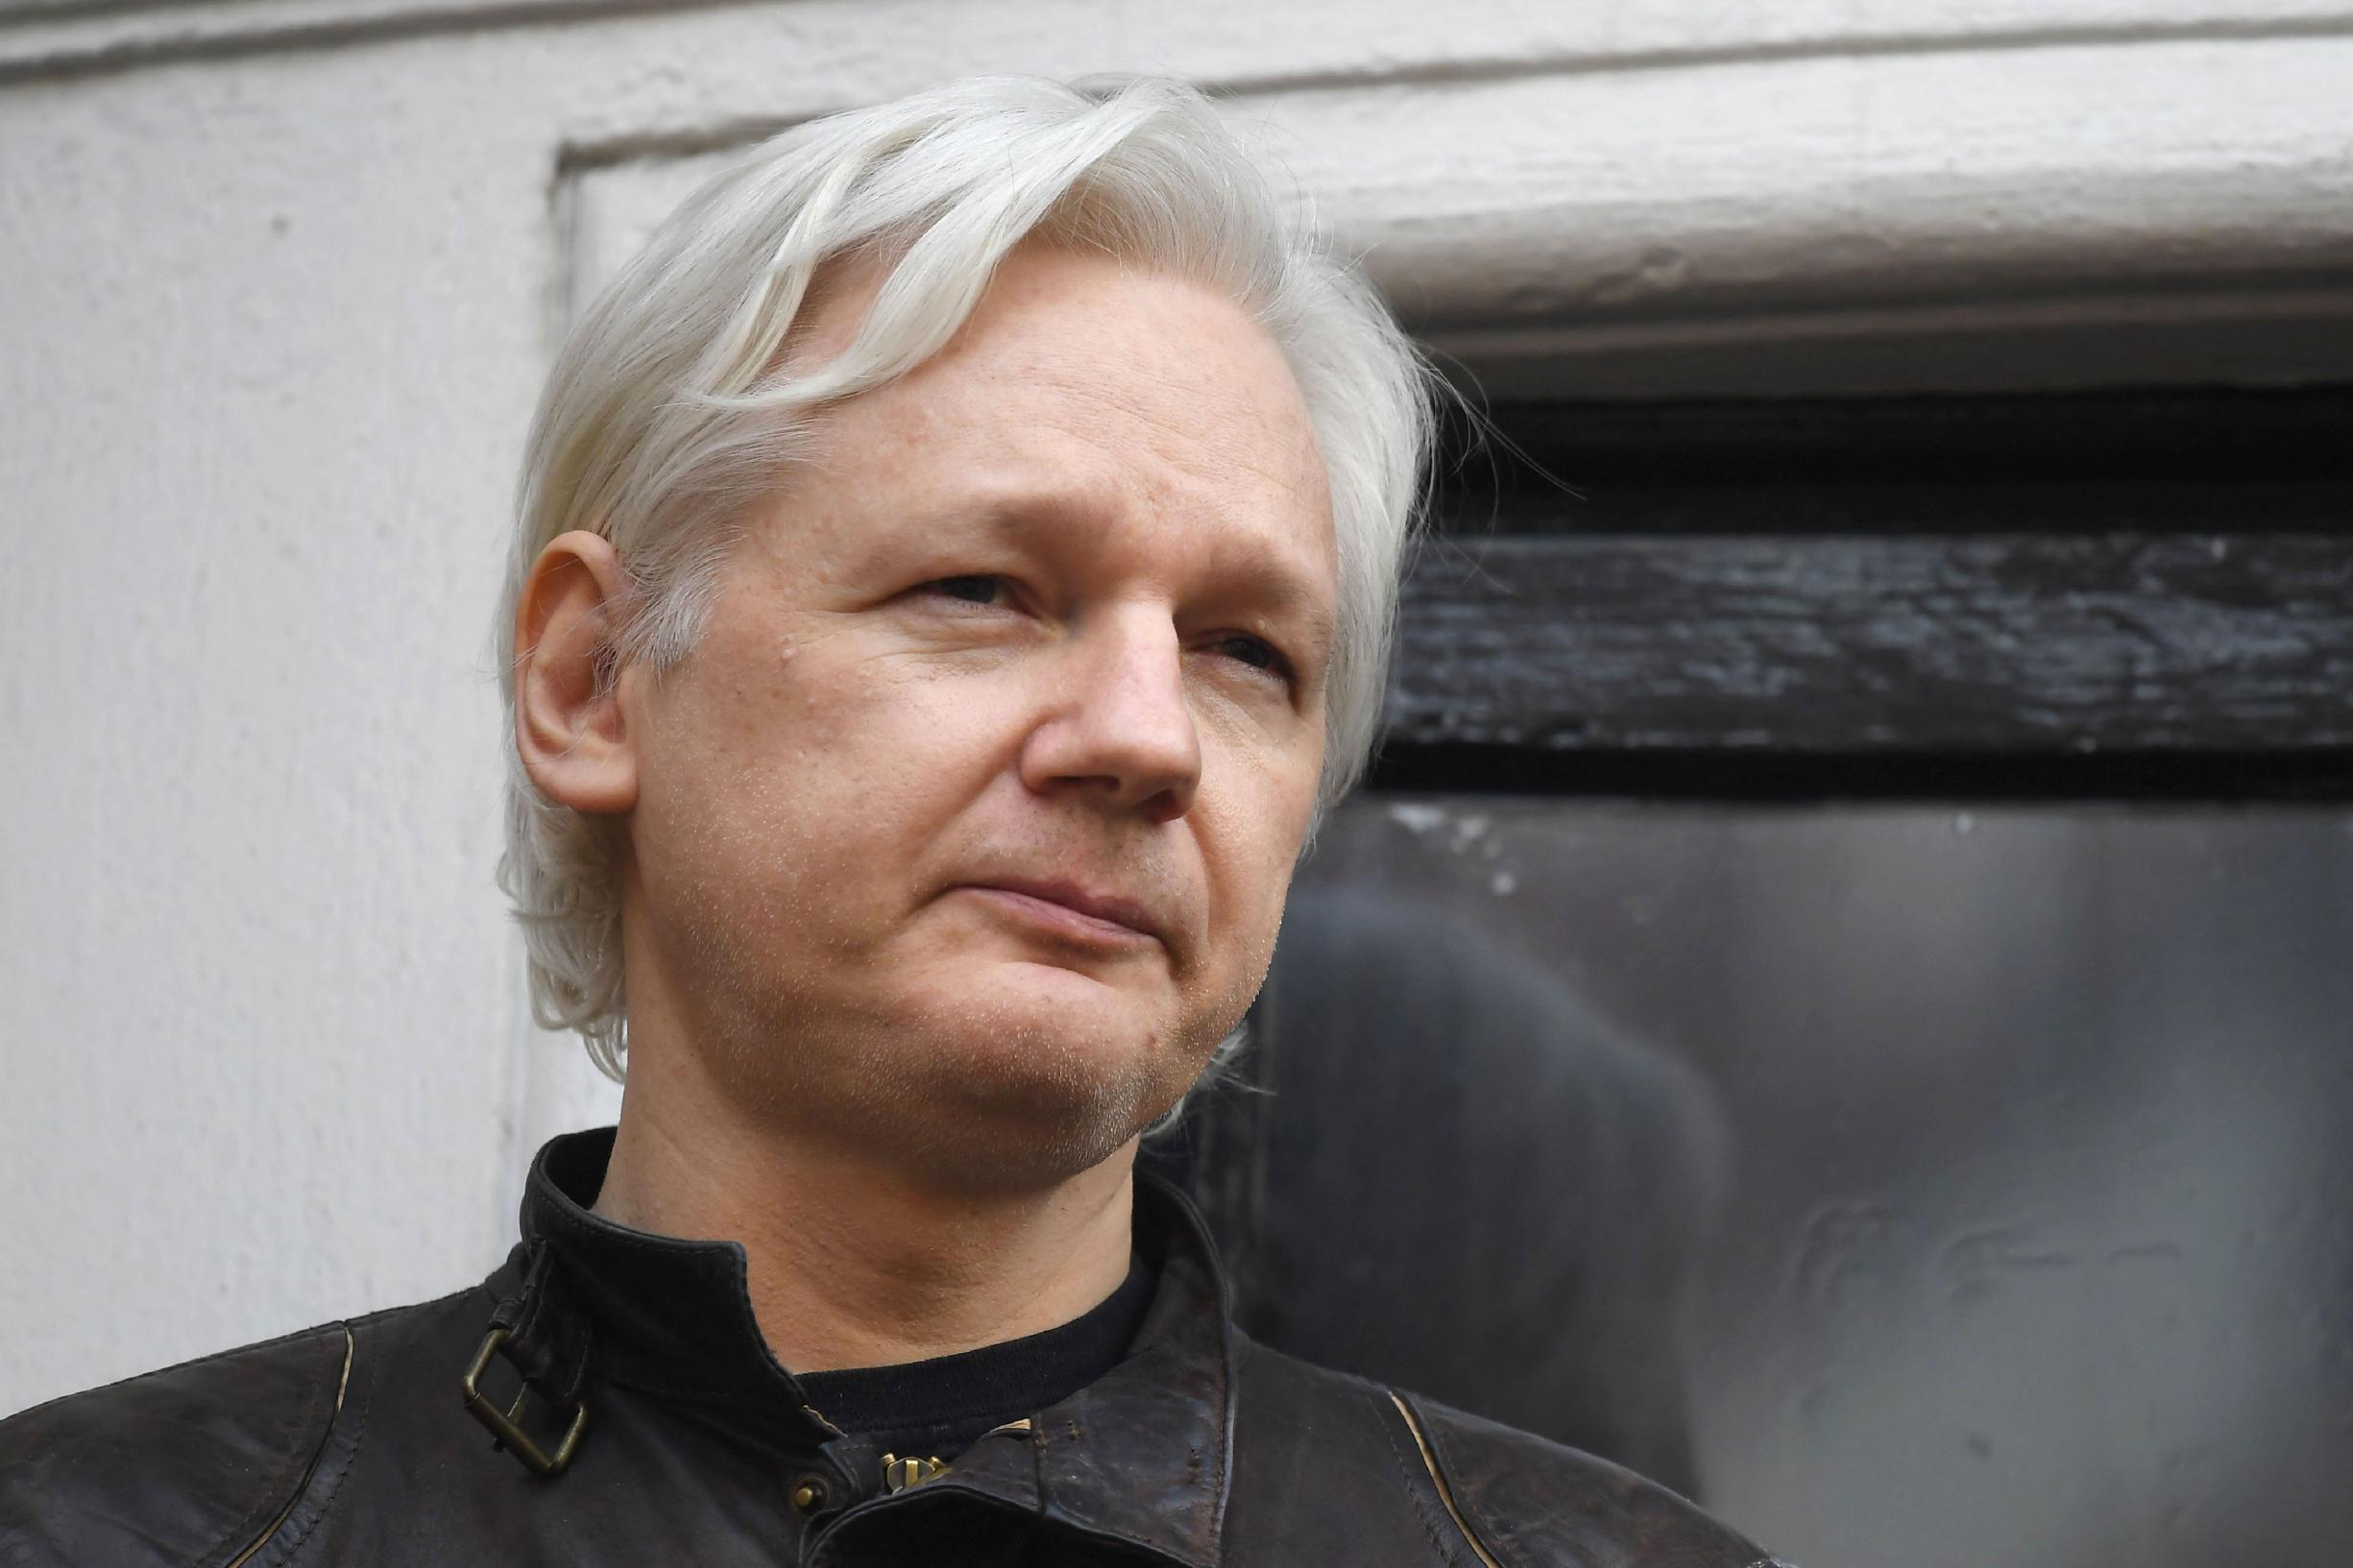 The UK Supreme Court has rejected Assange’s appeal against US deportation